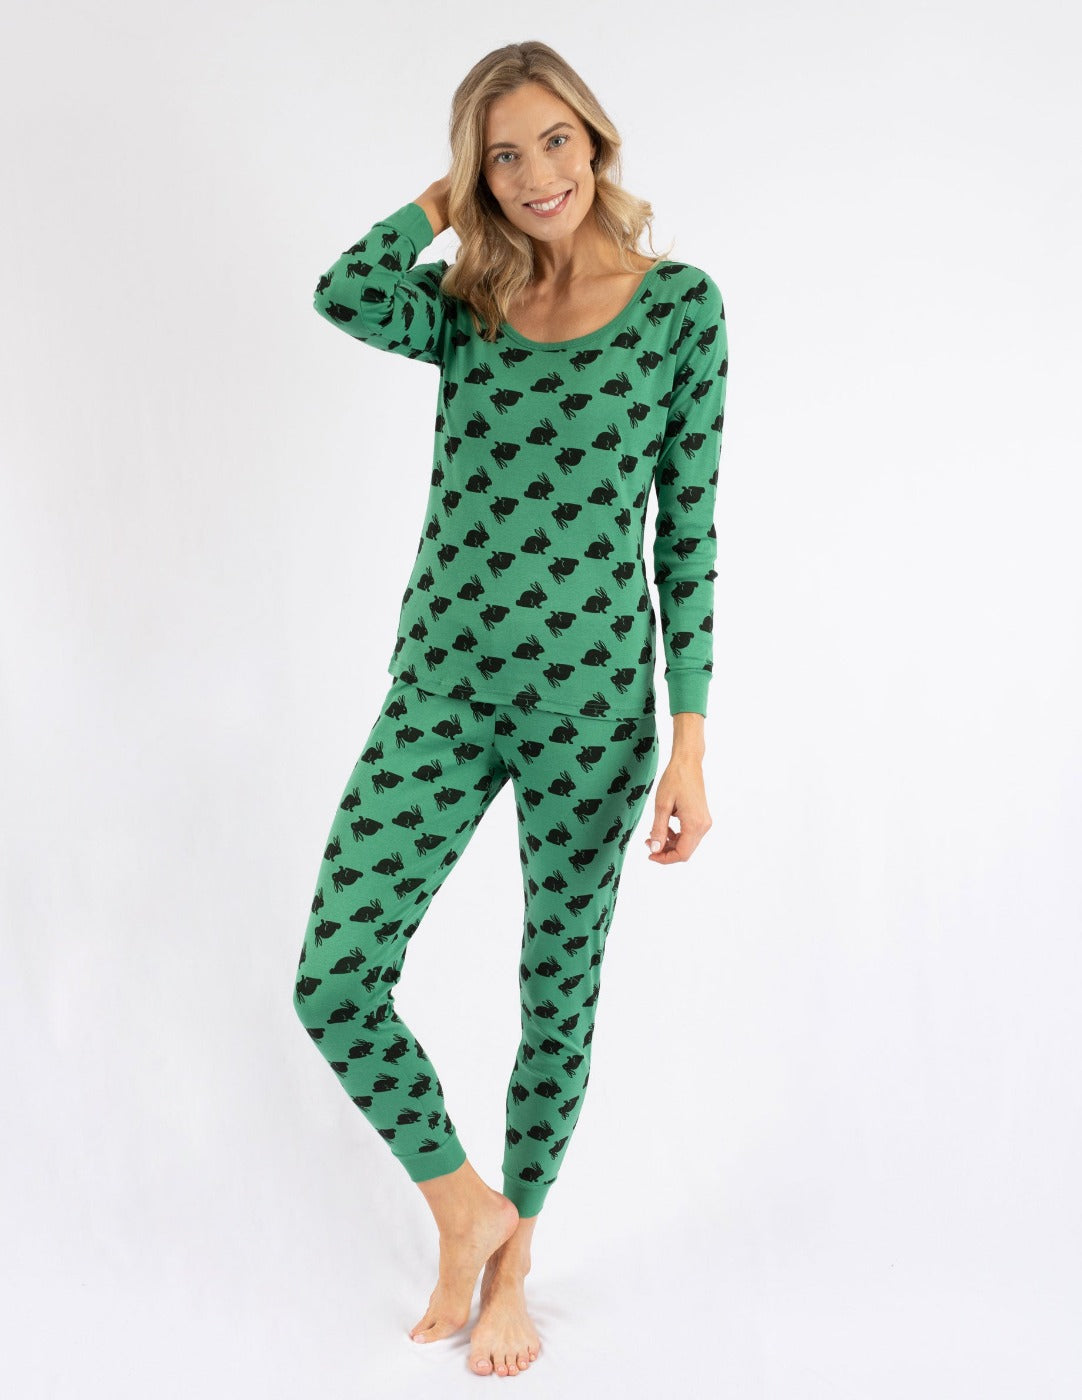 Women's Green Cotton Bunny Pajamas